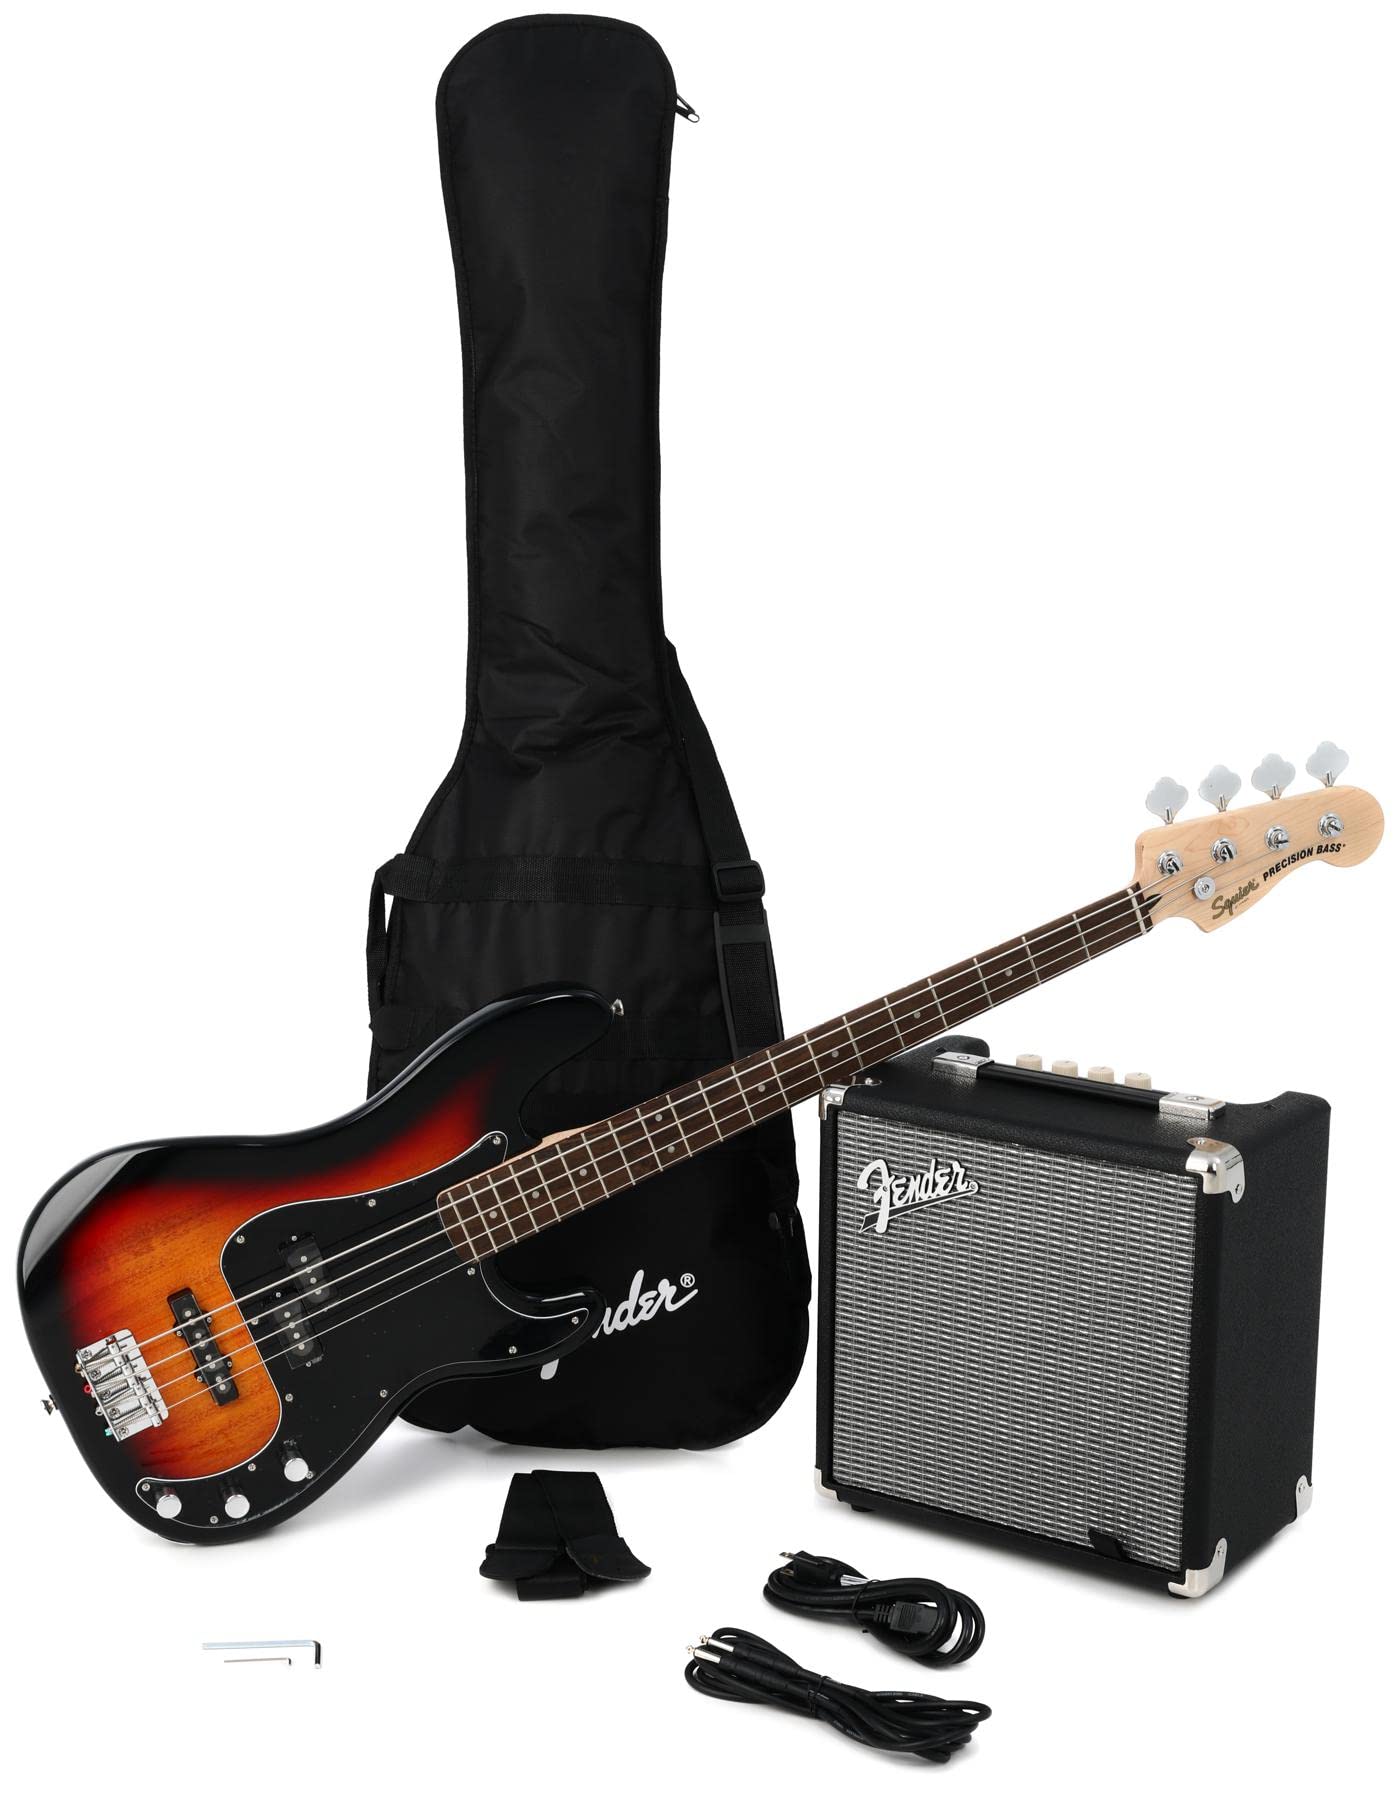 Fender Squier by Affinity 系列 PJ 贝斯、Laurel 指板、3 色 Sunburst、Rumble 15 Amp